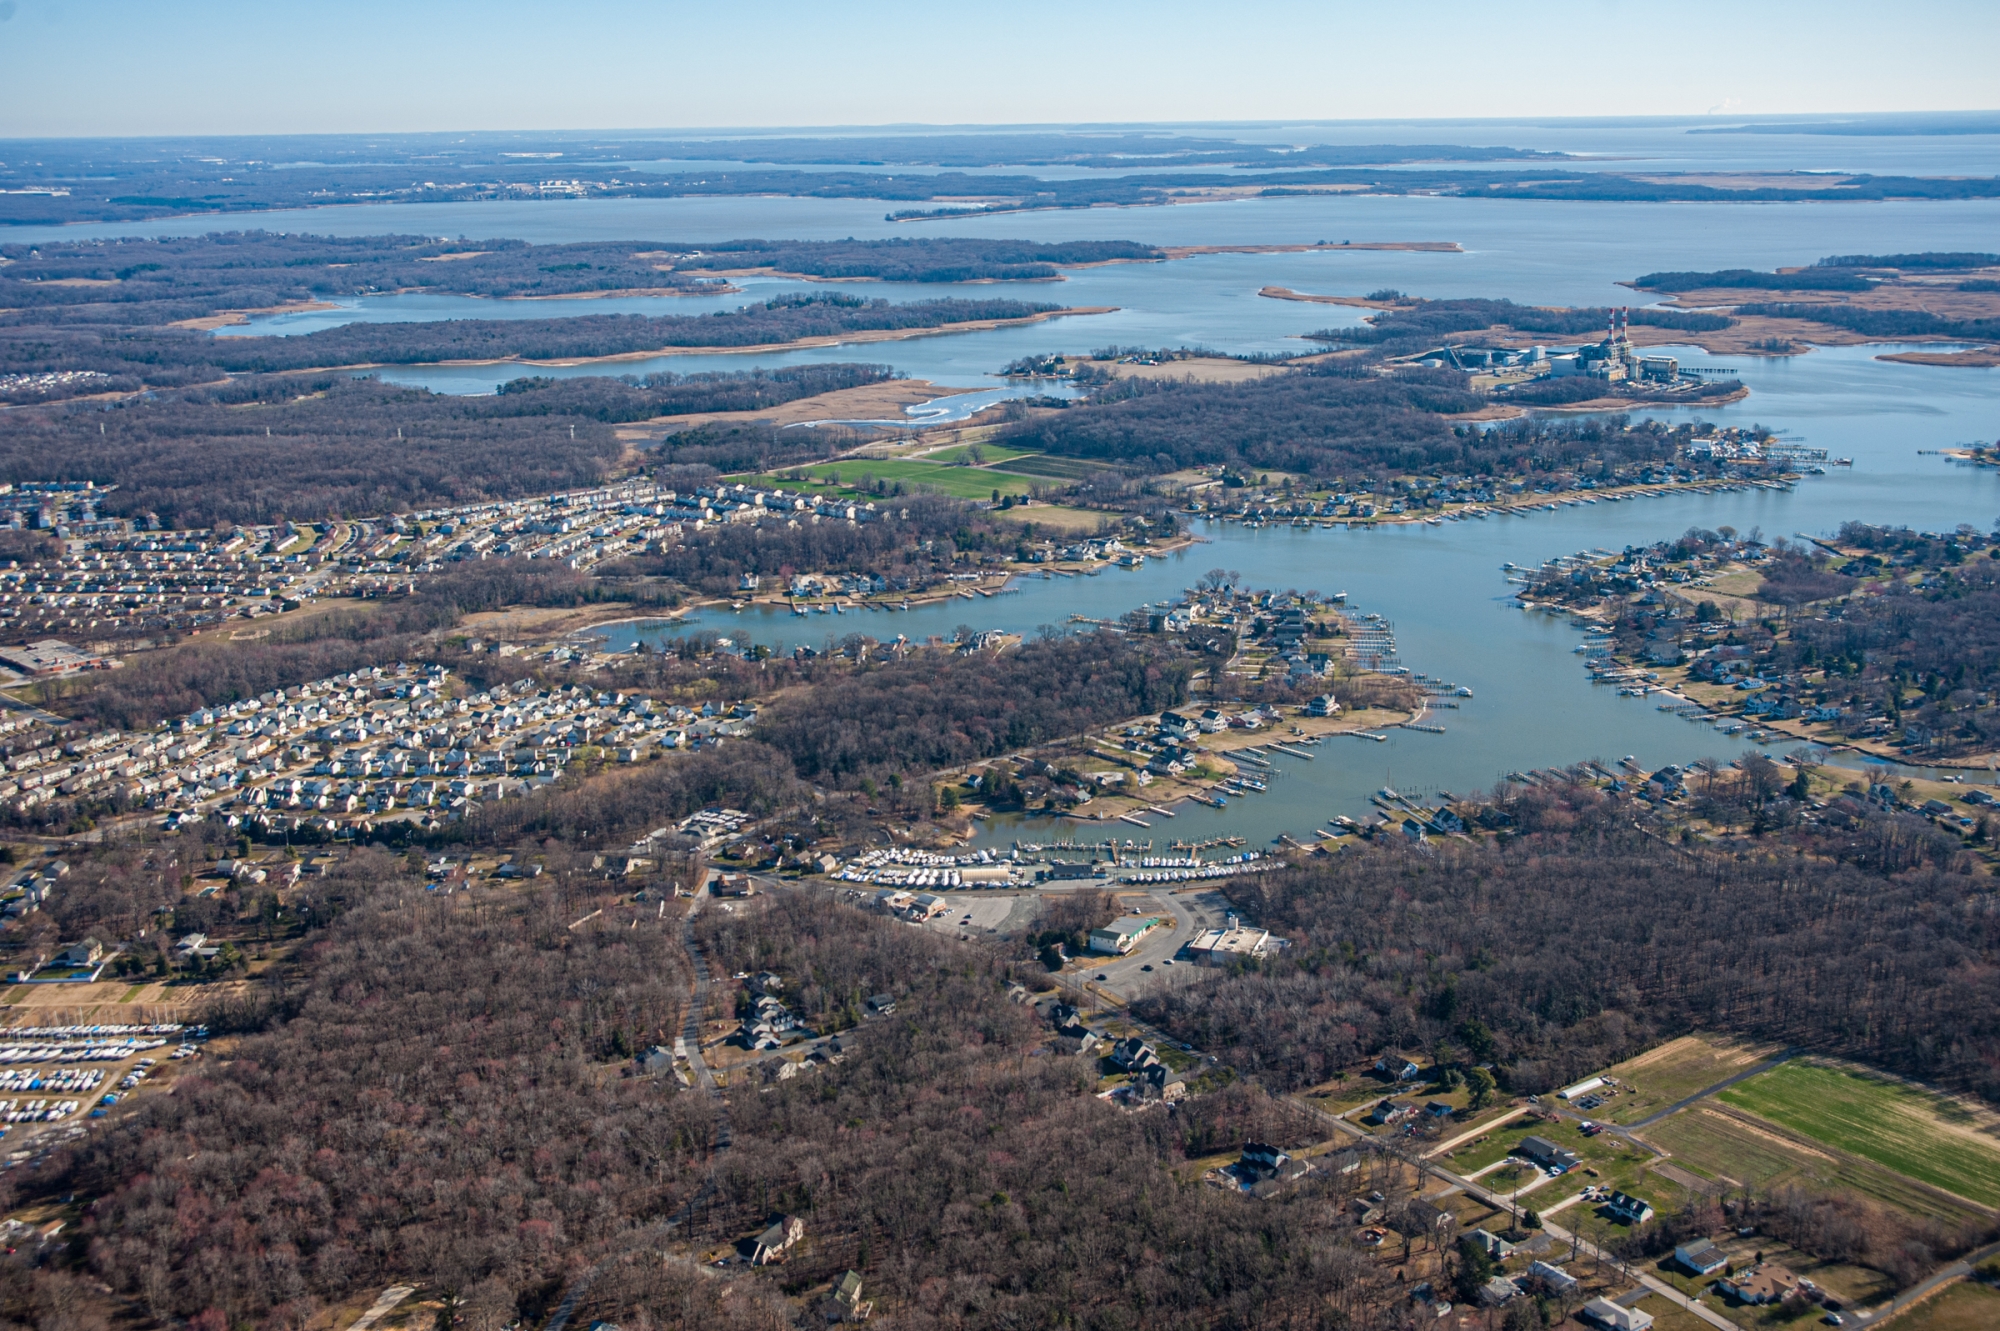 Aerial photo of development around a river